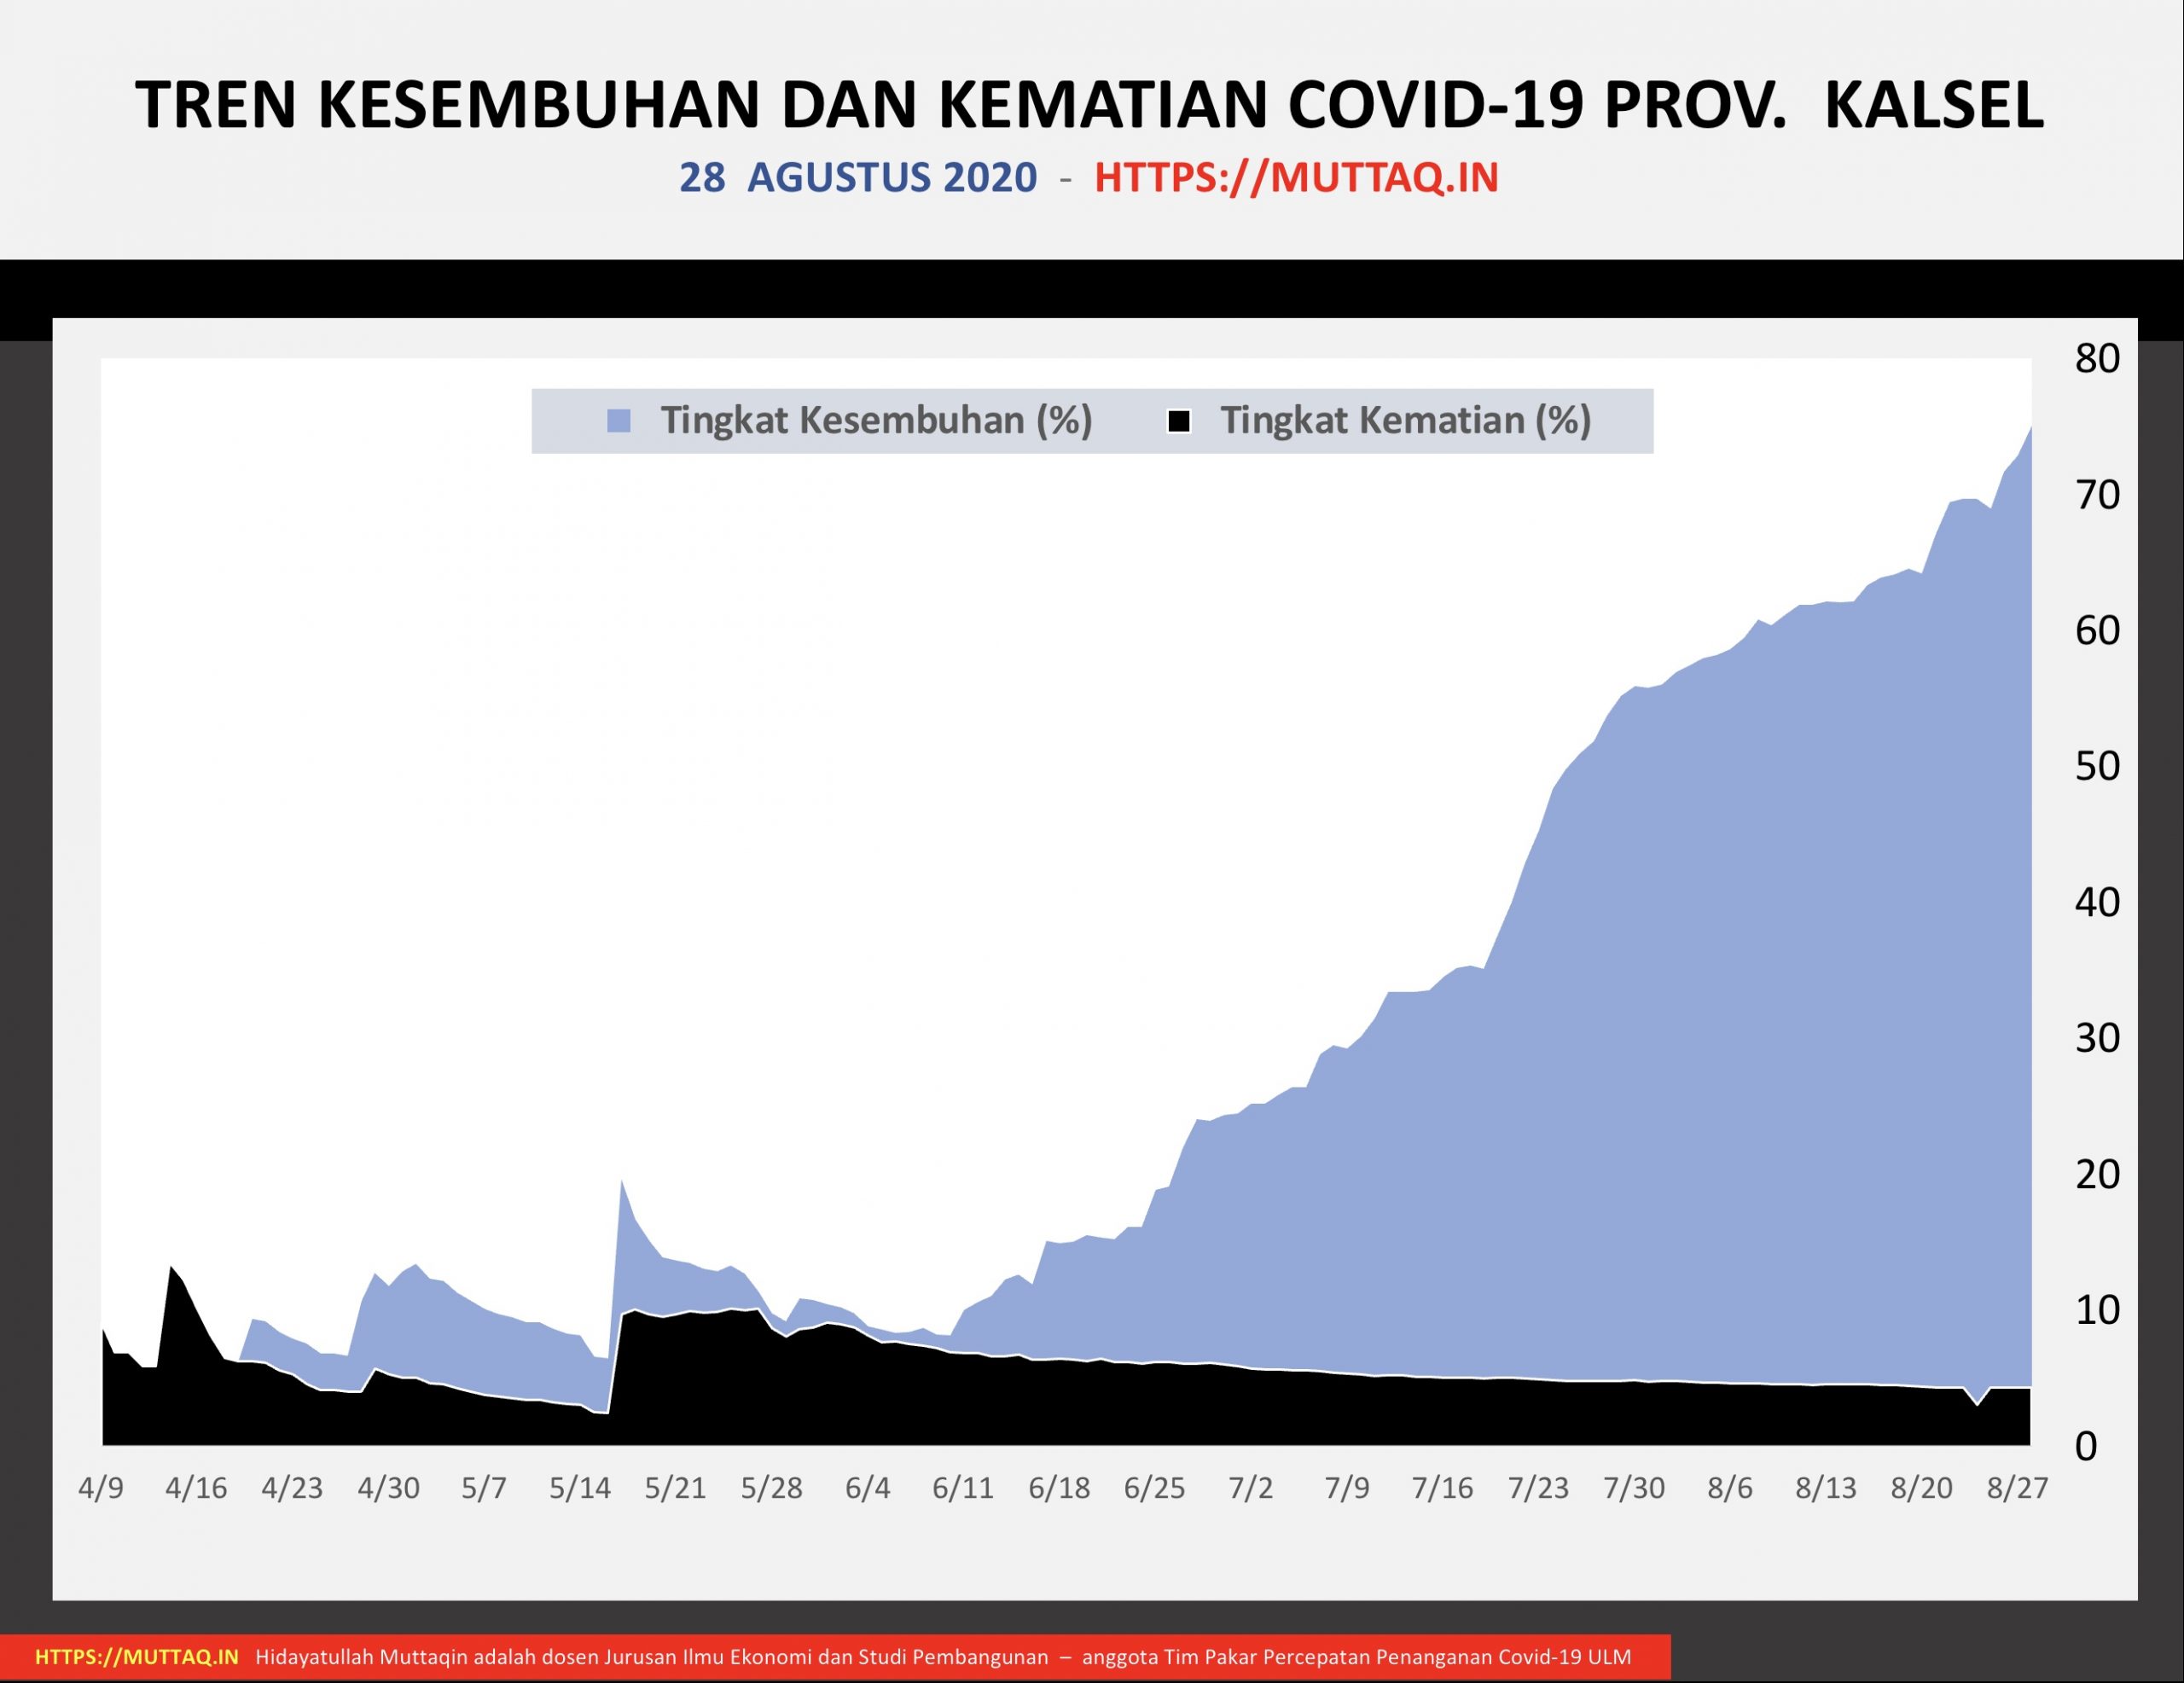 Tingkat kesembuhan dan kematian Covid-19 Kalimantan Selatan